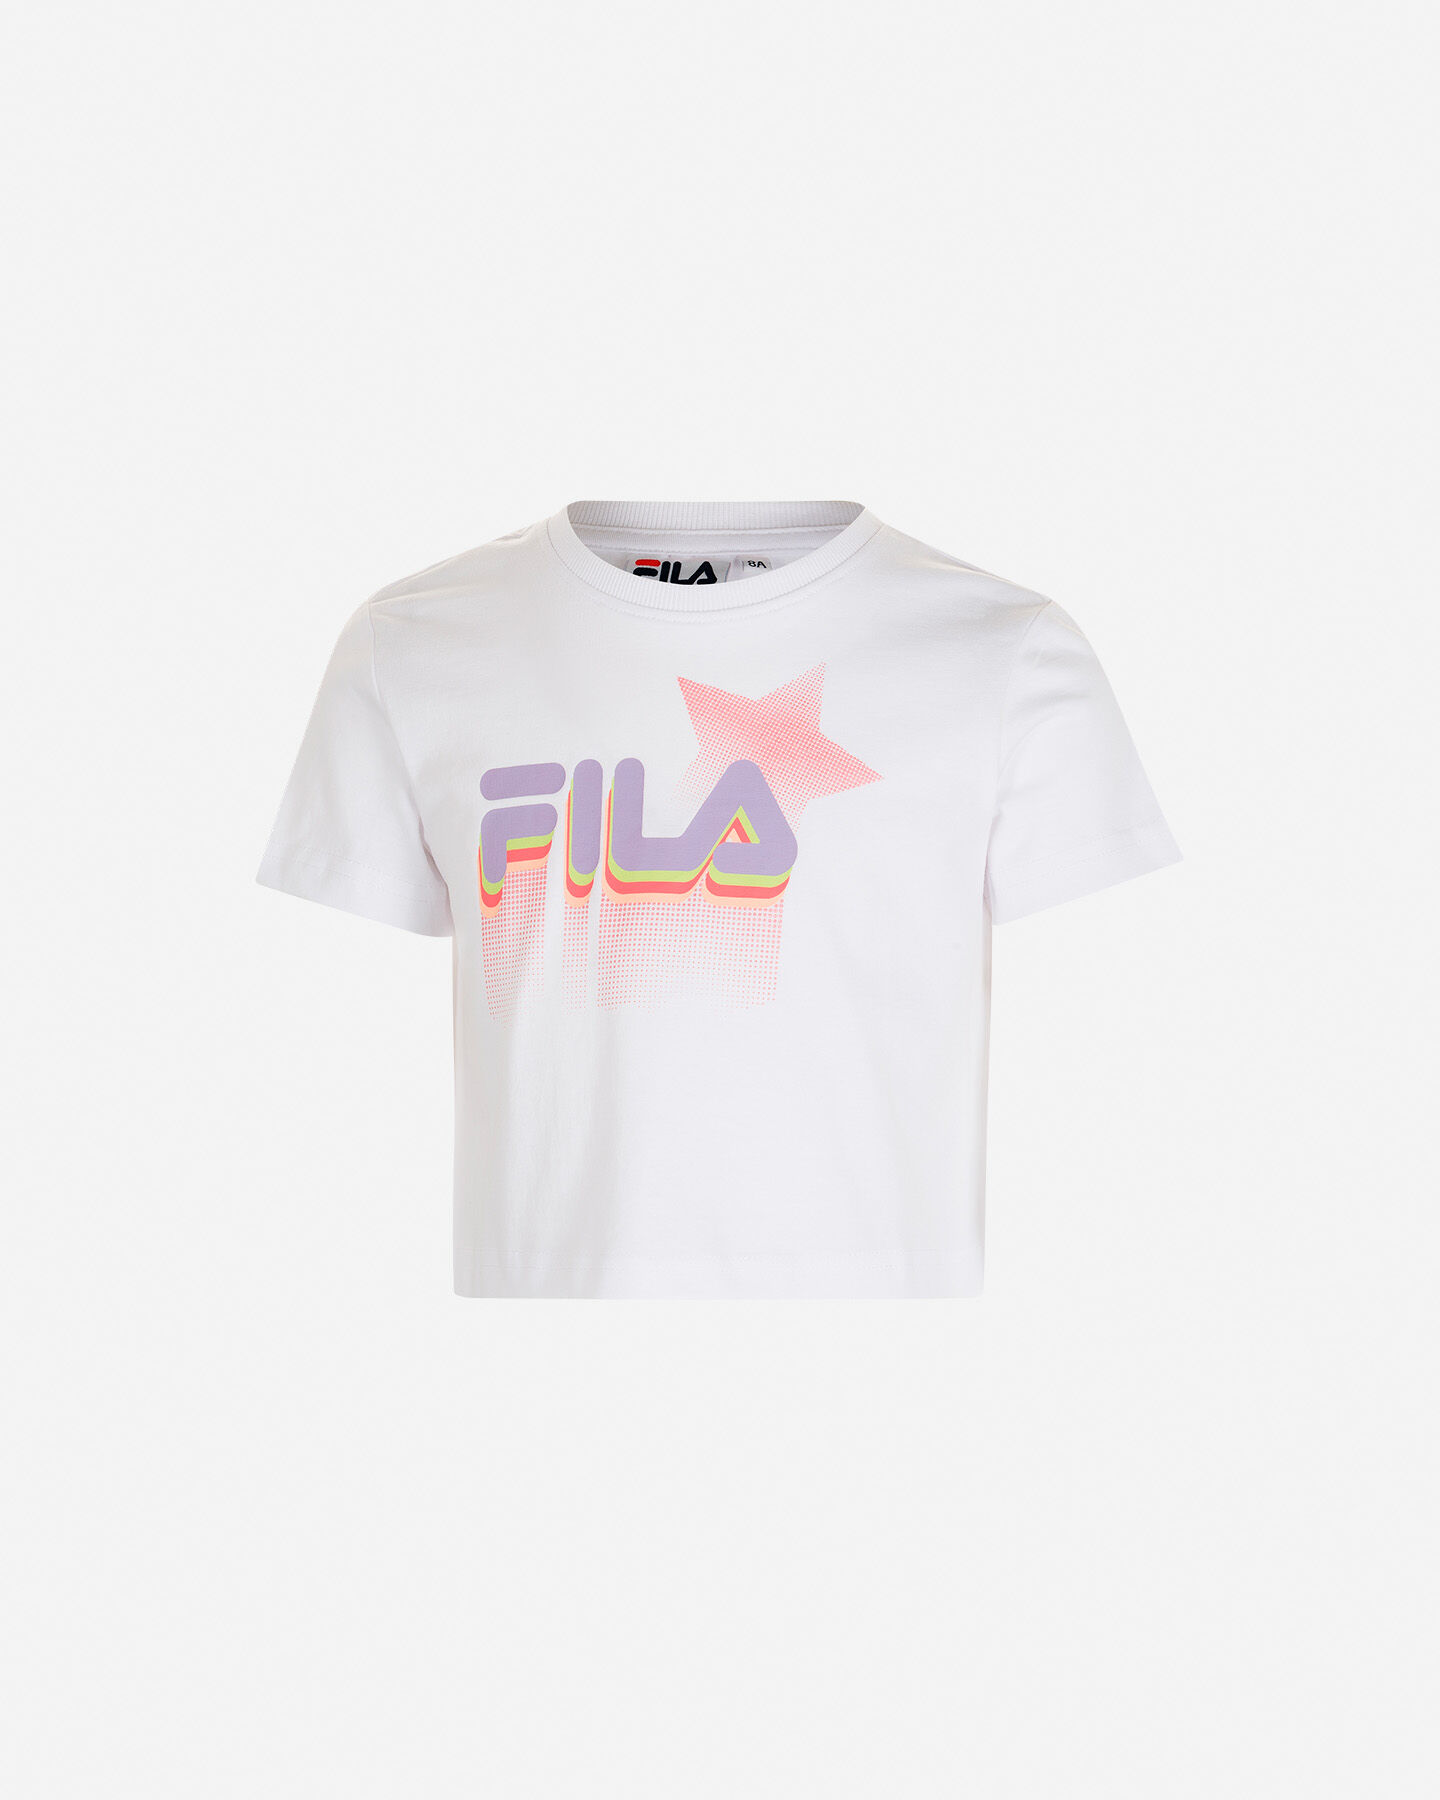  T-Shirt FILA GRAPHICS LOGO LINEA JR S4100803|001|6A scatto 0